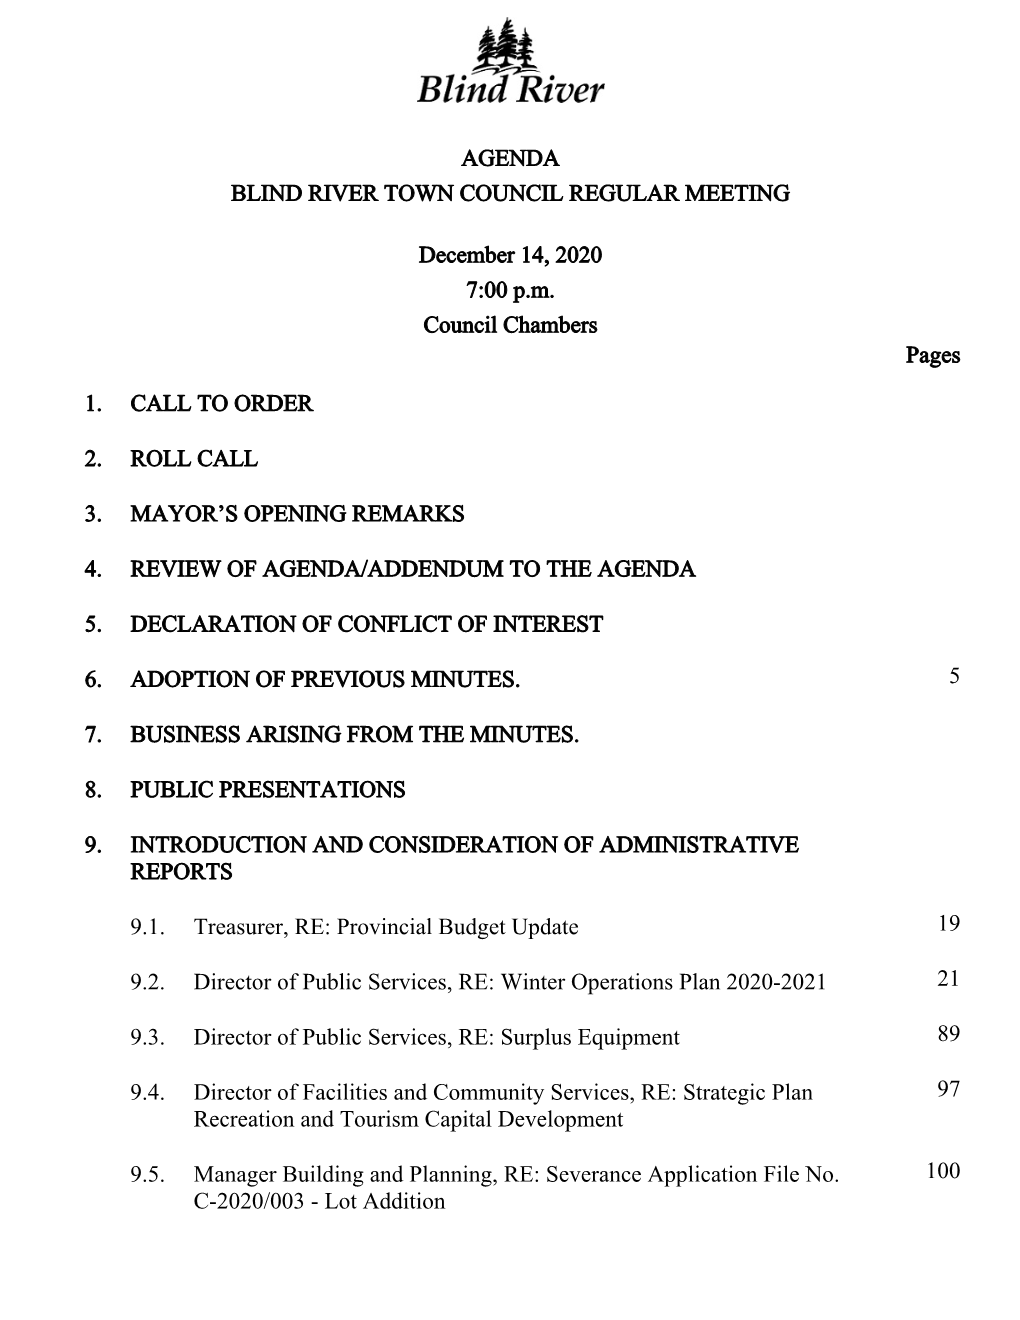 Agenda Blind River Town Council Regular Meeting